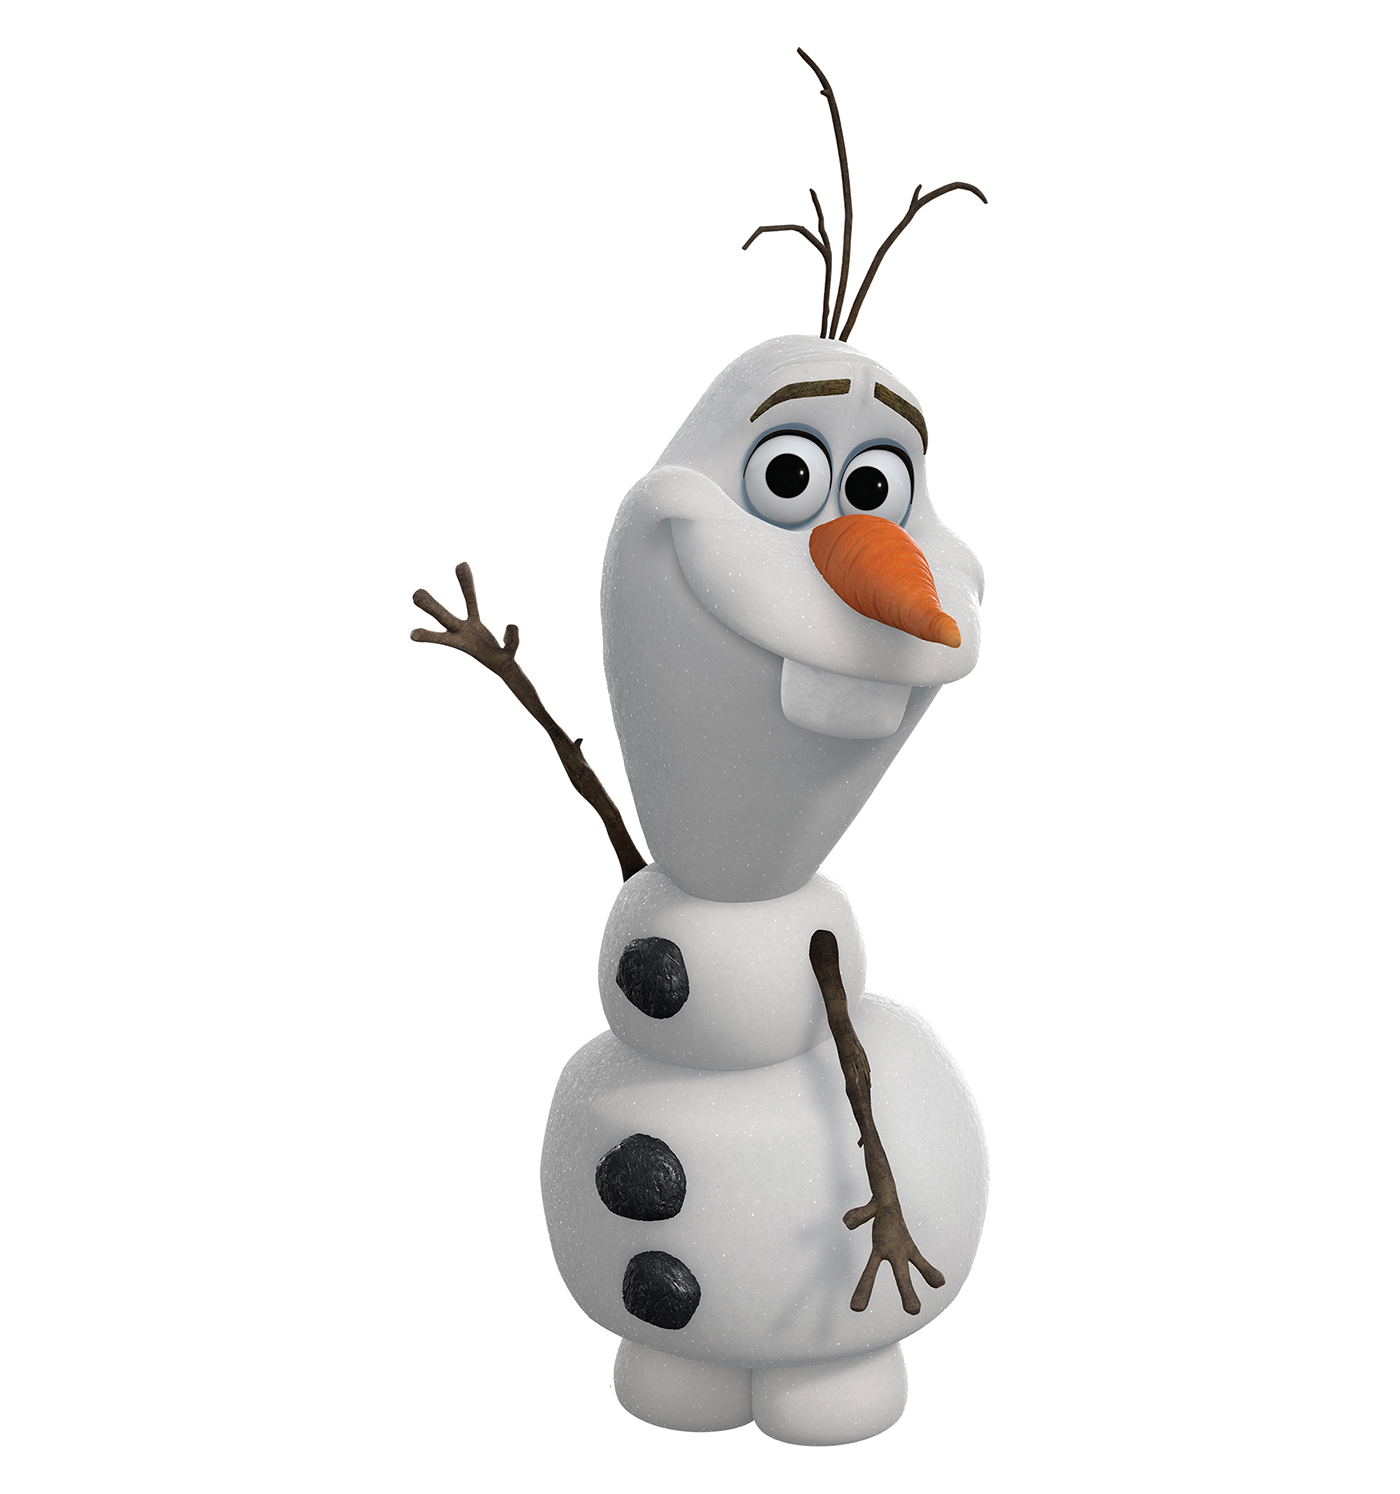 Download Frozen Olaf Photos HQ PNG Image | FreePNGImg